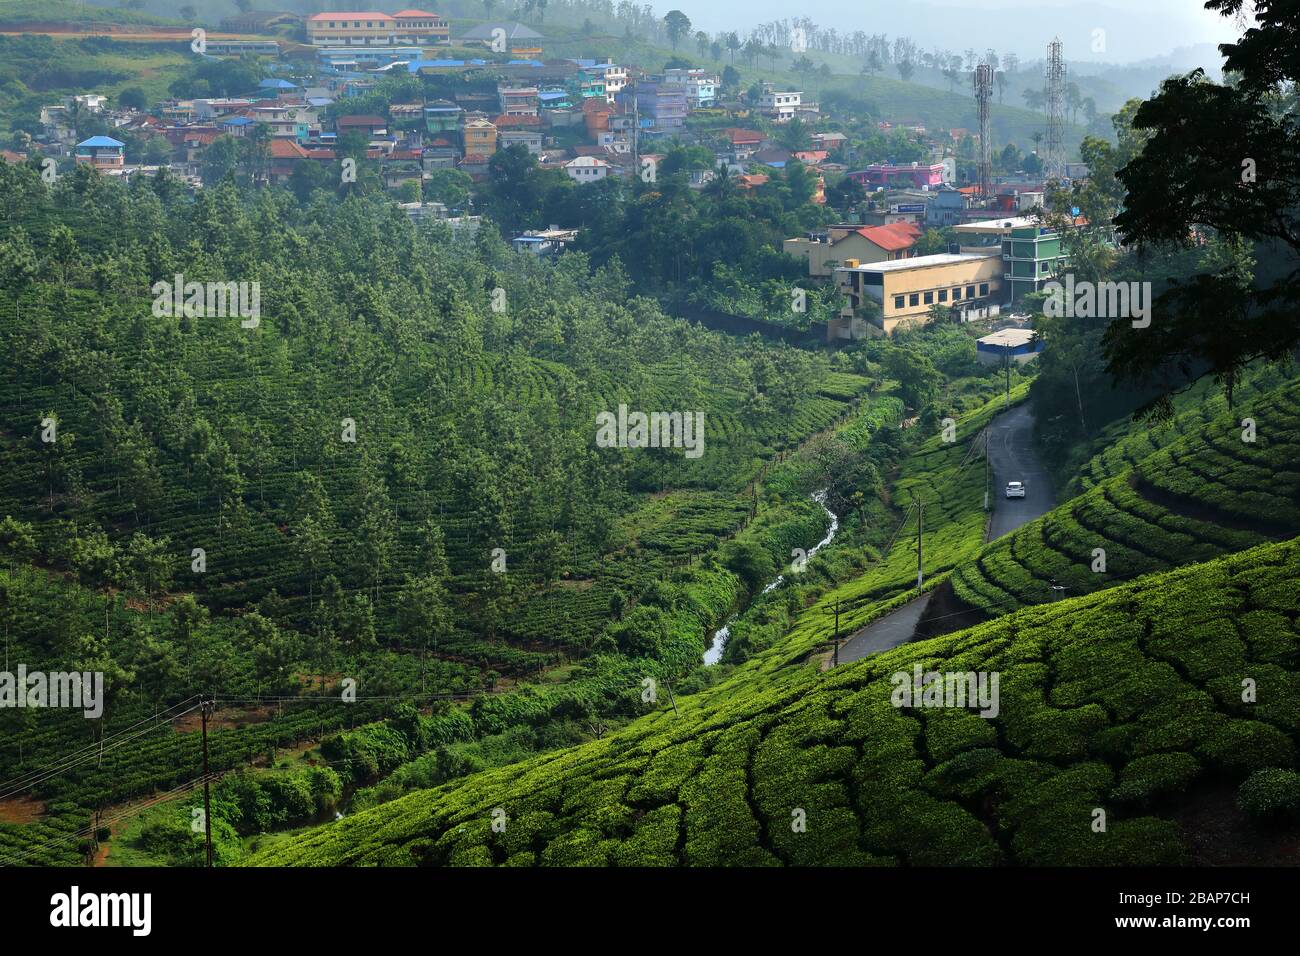 Tea plantation and urbanisation in India Stock Photo